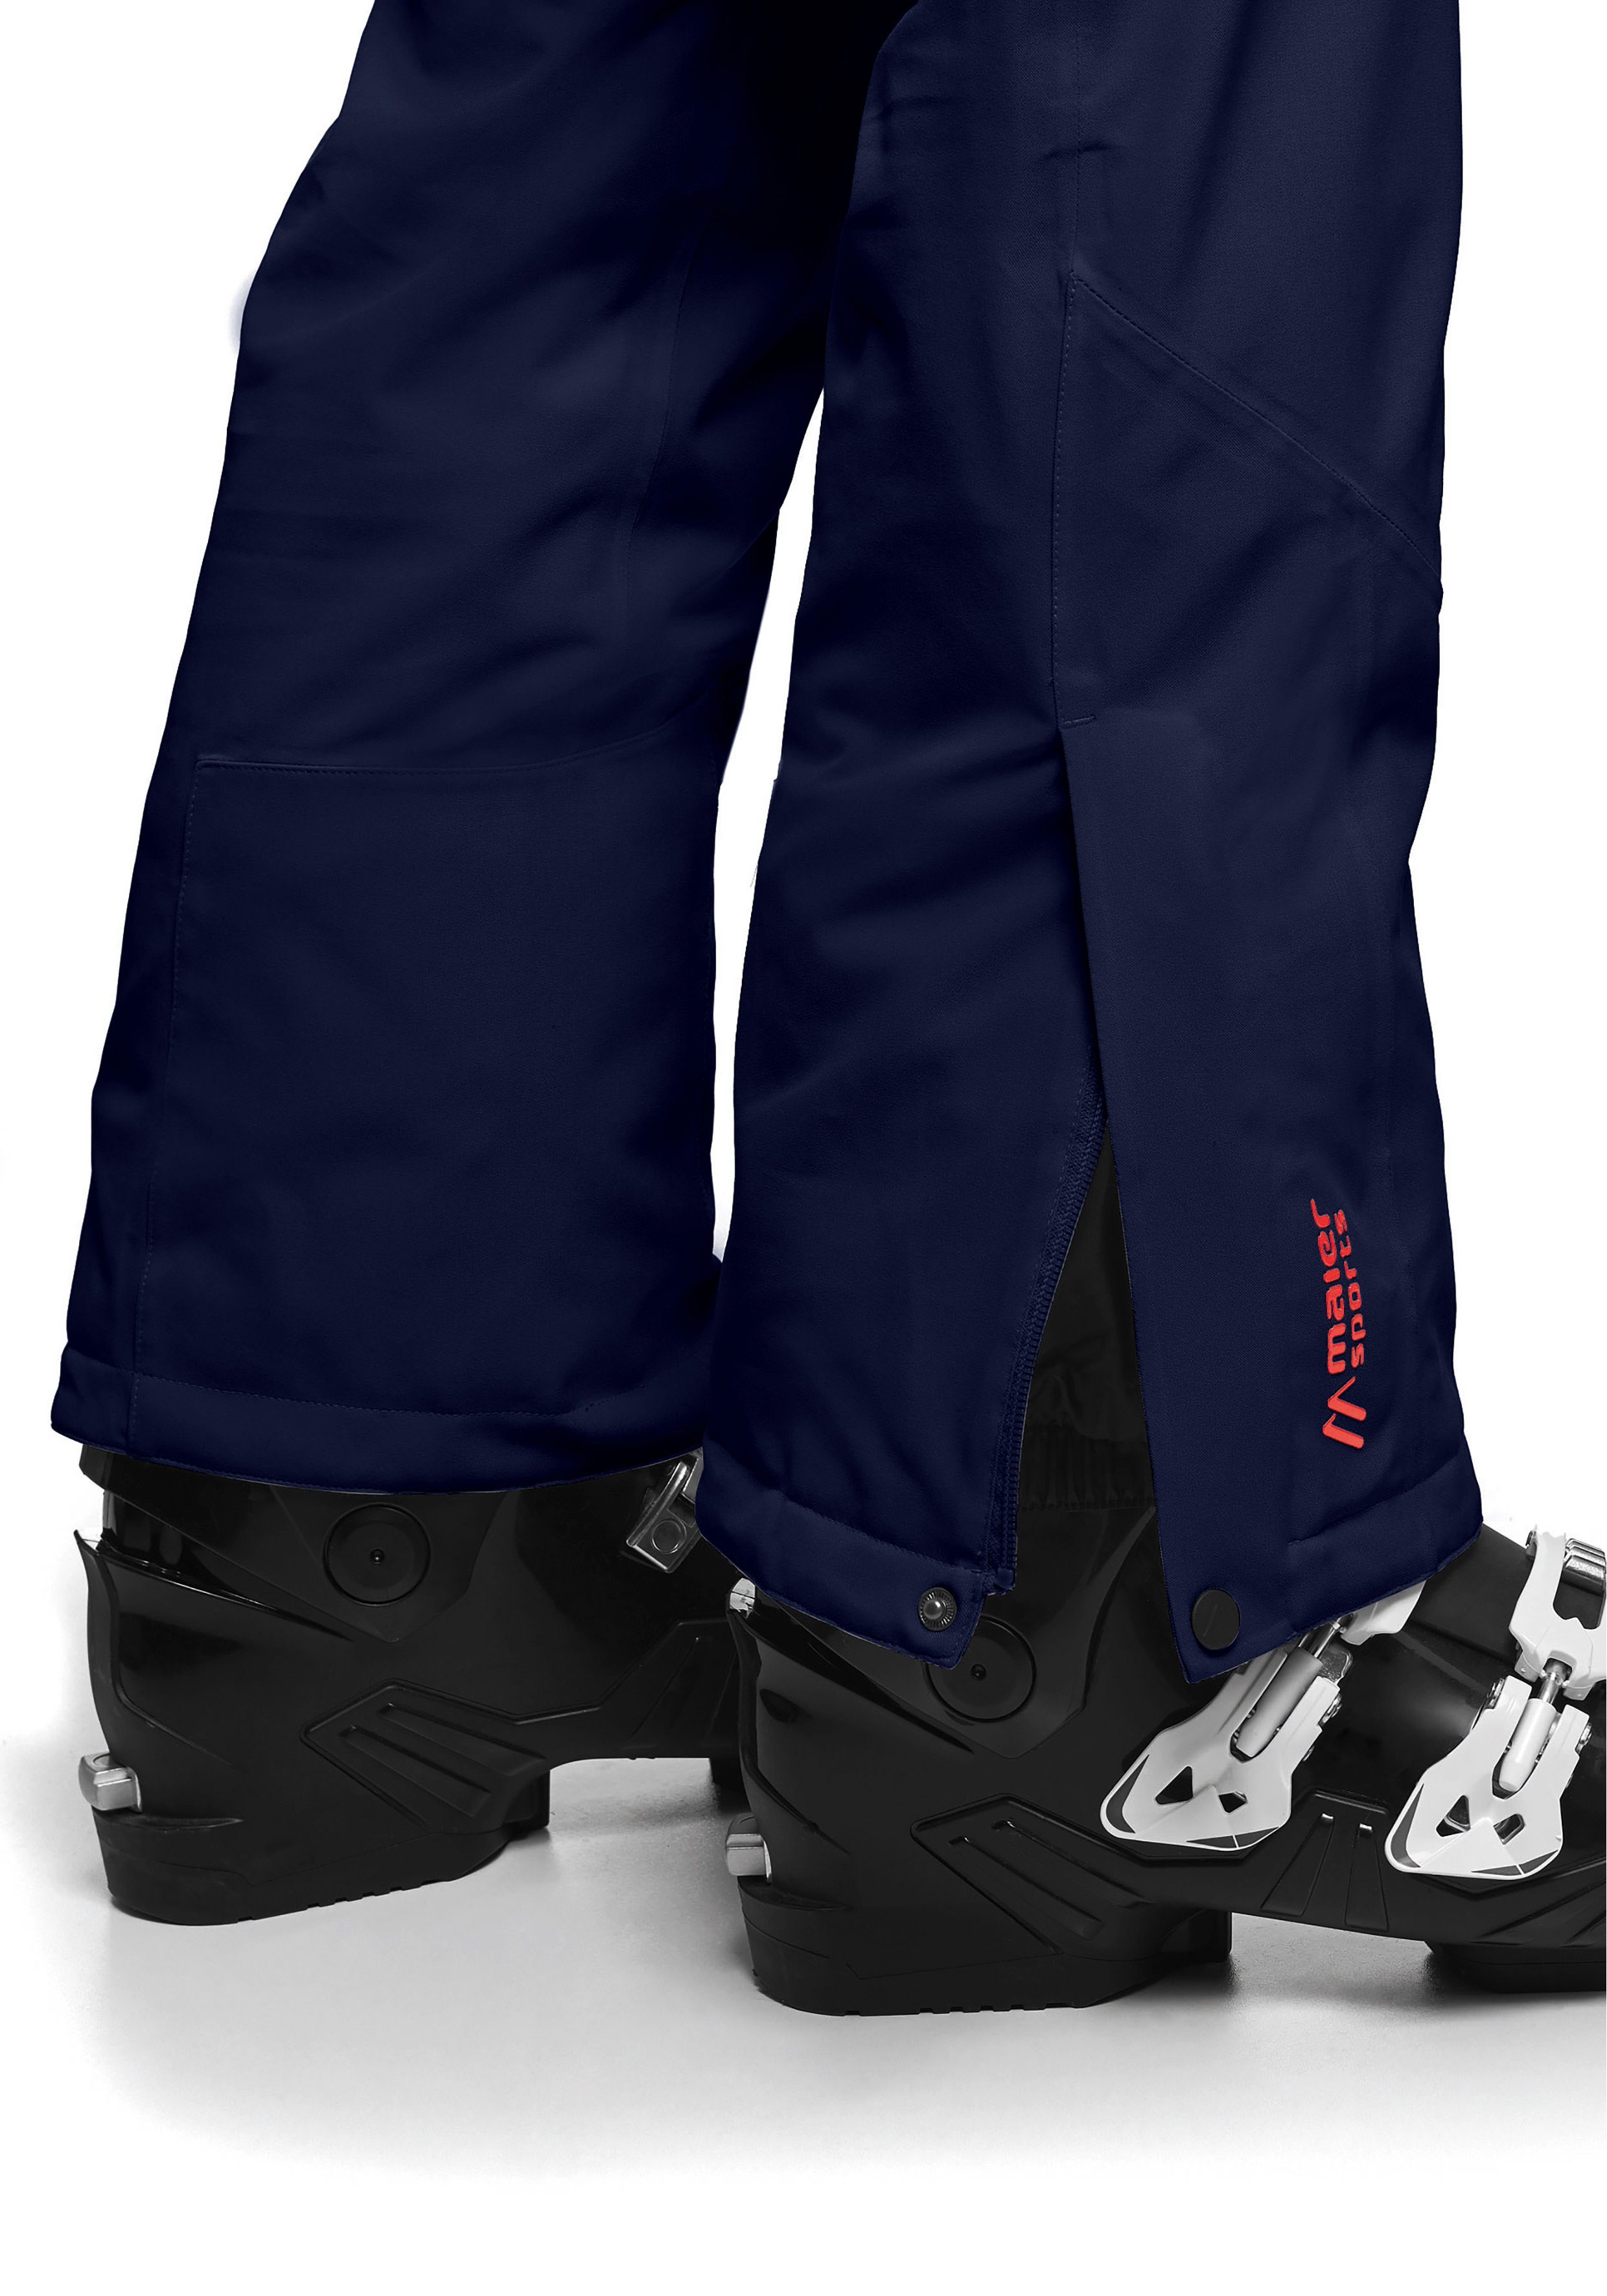 Maier Sports Skihose dunkelblau Coral Skihose Pants schlanker Silhouette sportliche in Feminin